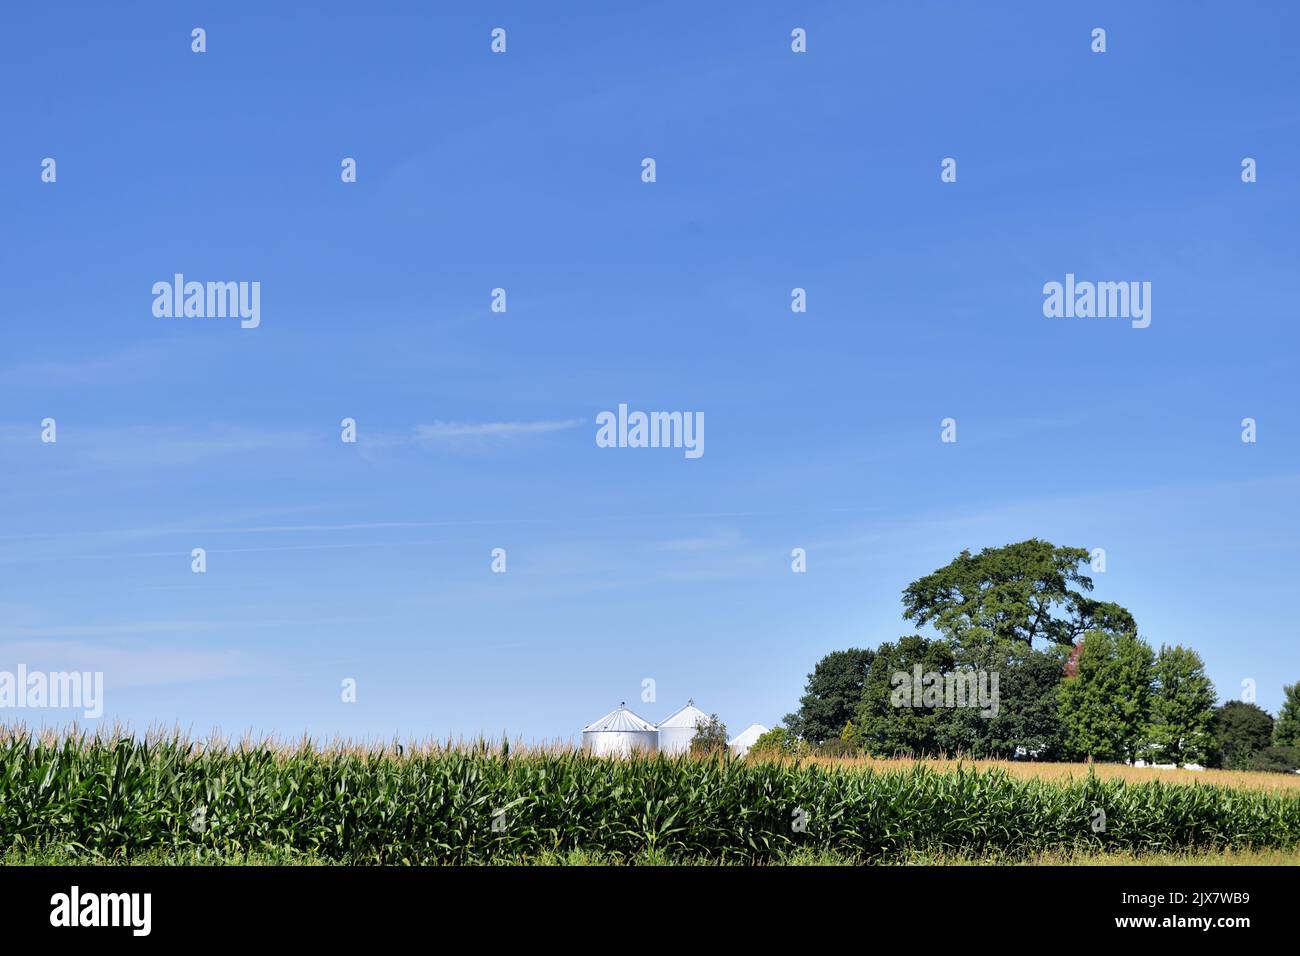 LaFox, Illinois, USA. An abundant, mature corn crop in a cornfield in northeastern Illinois. Stock Photo